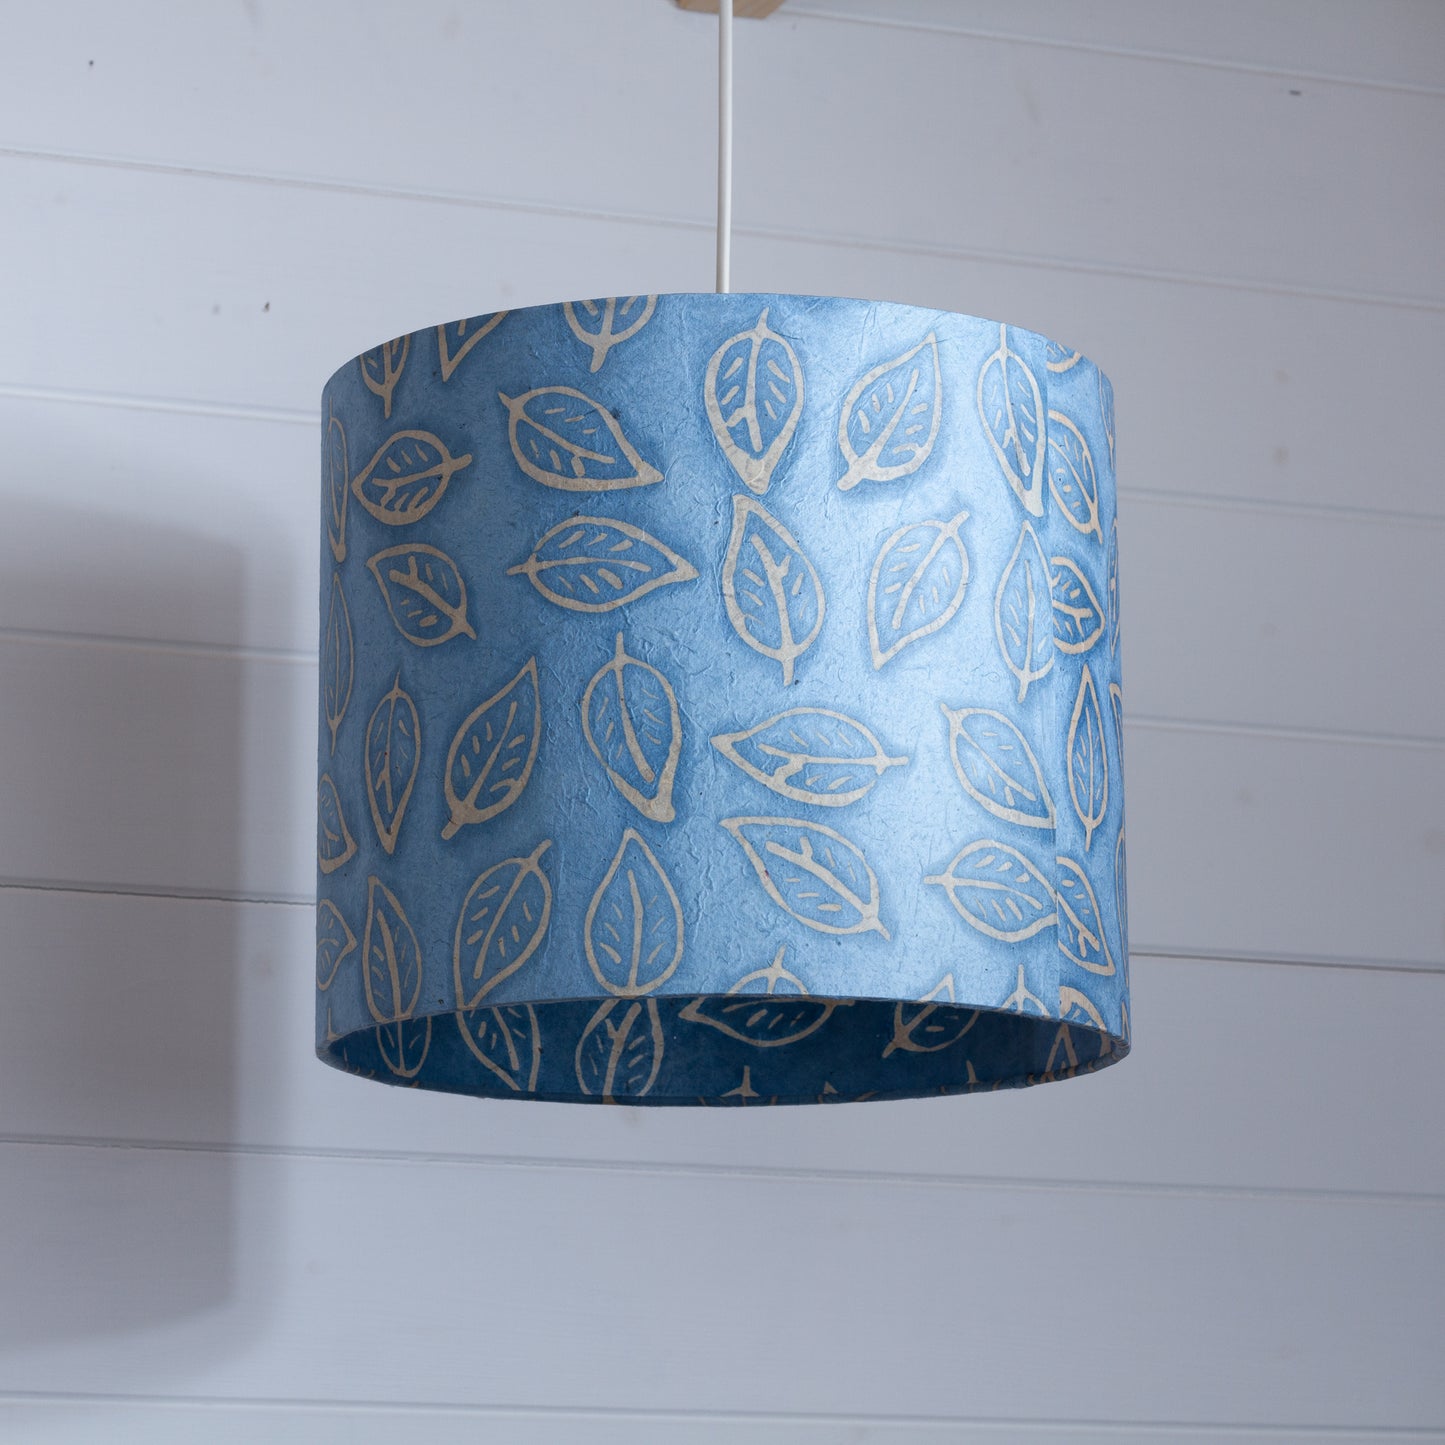 Drum Lamp Shade - P31 - Batik Leaf on Blue, 30cm(d) x 25cm(h)